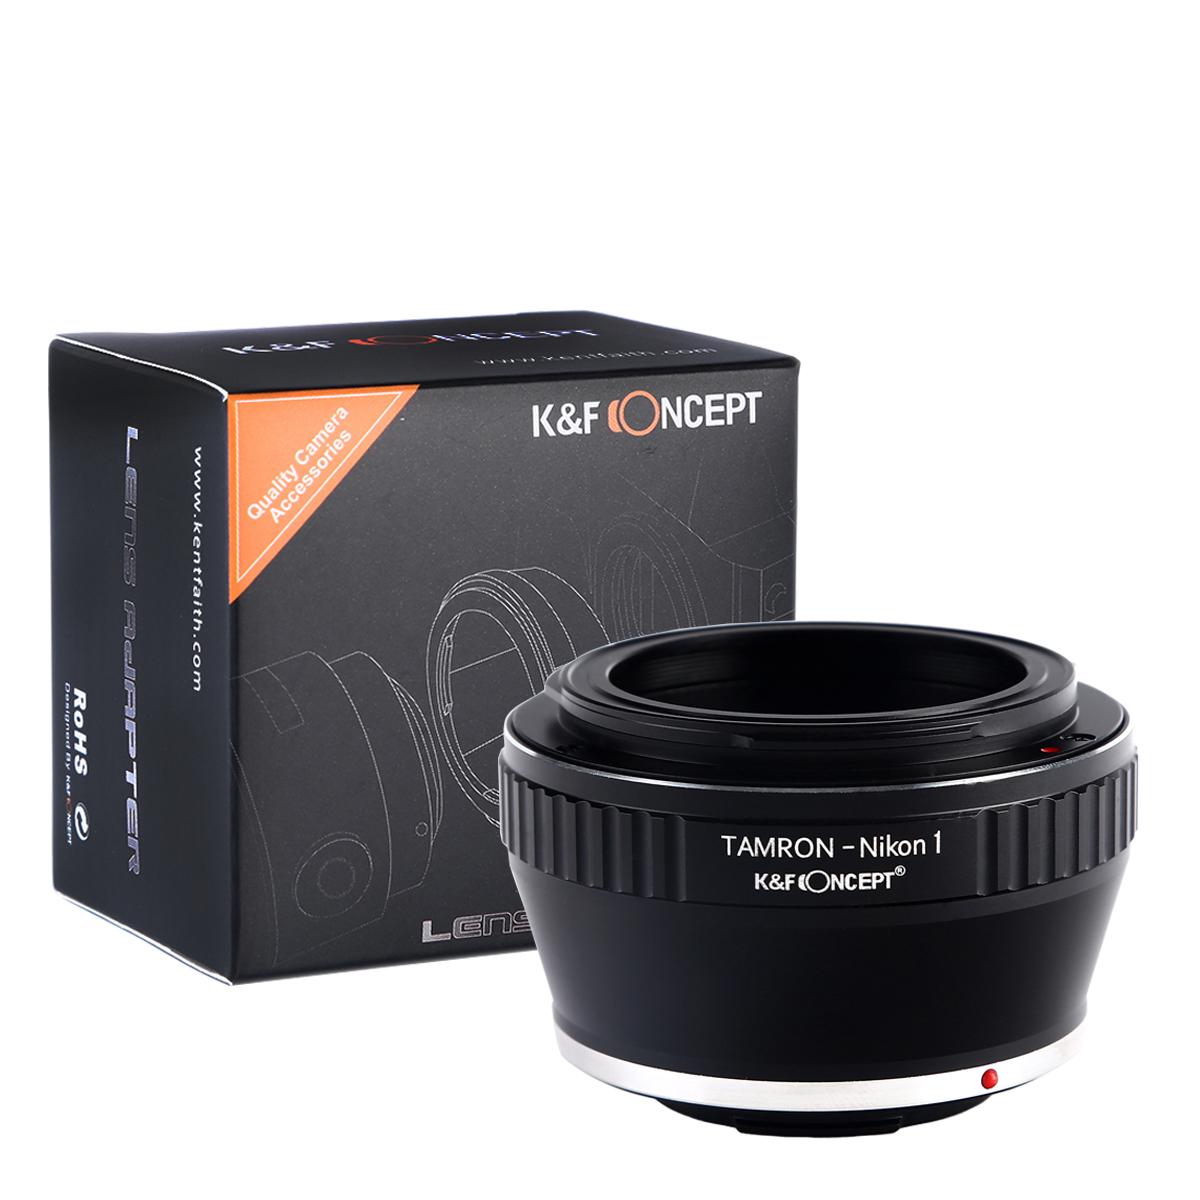 Product Image of K&F Concept Tamron Adaptall II Lenses to Nikon 1 Camera Mount Adapter